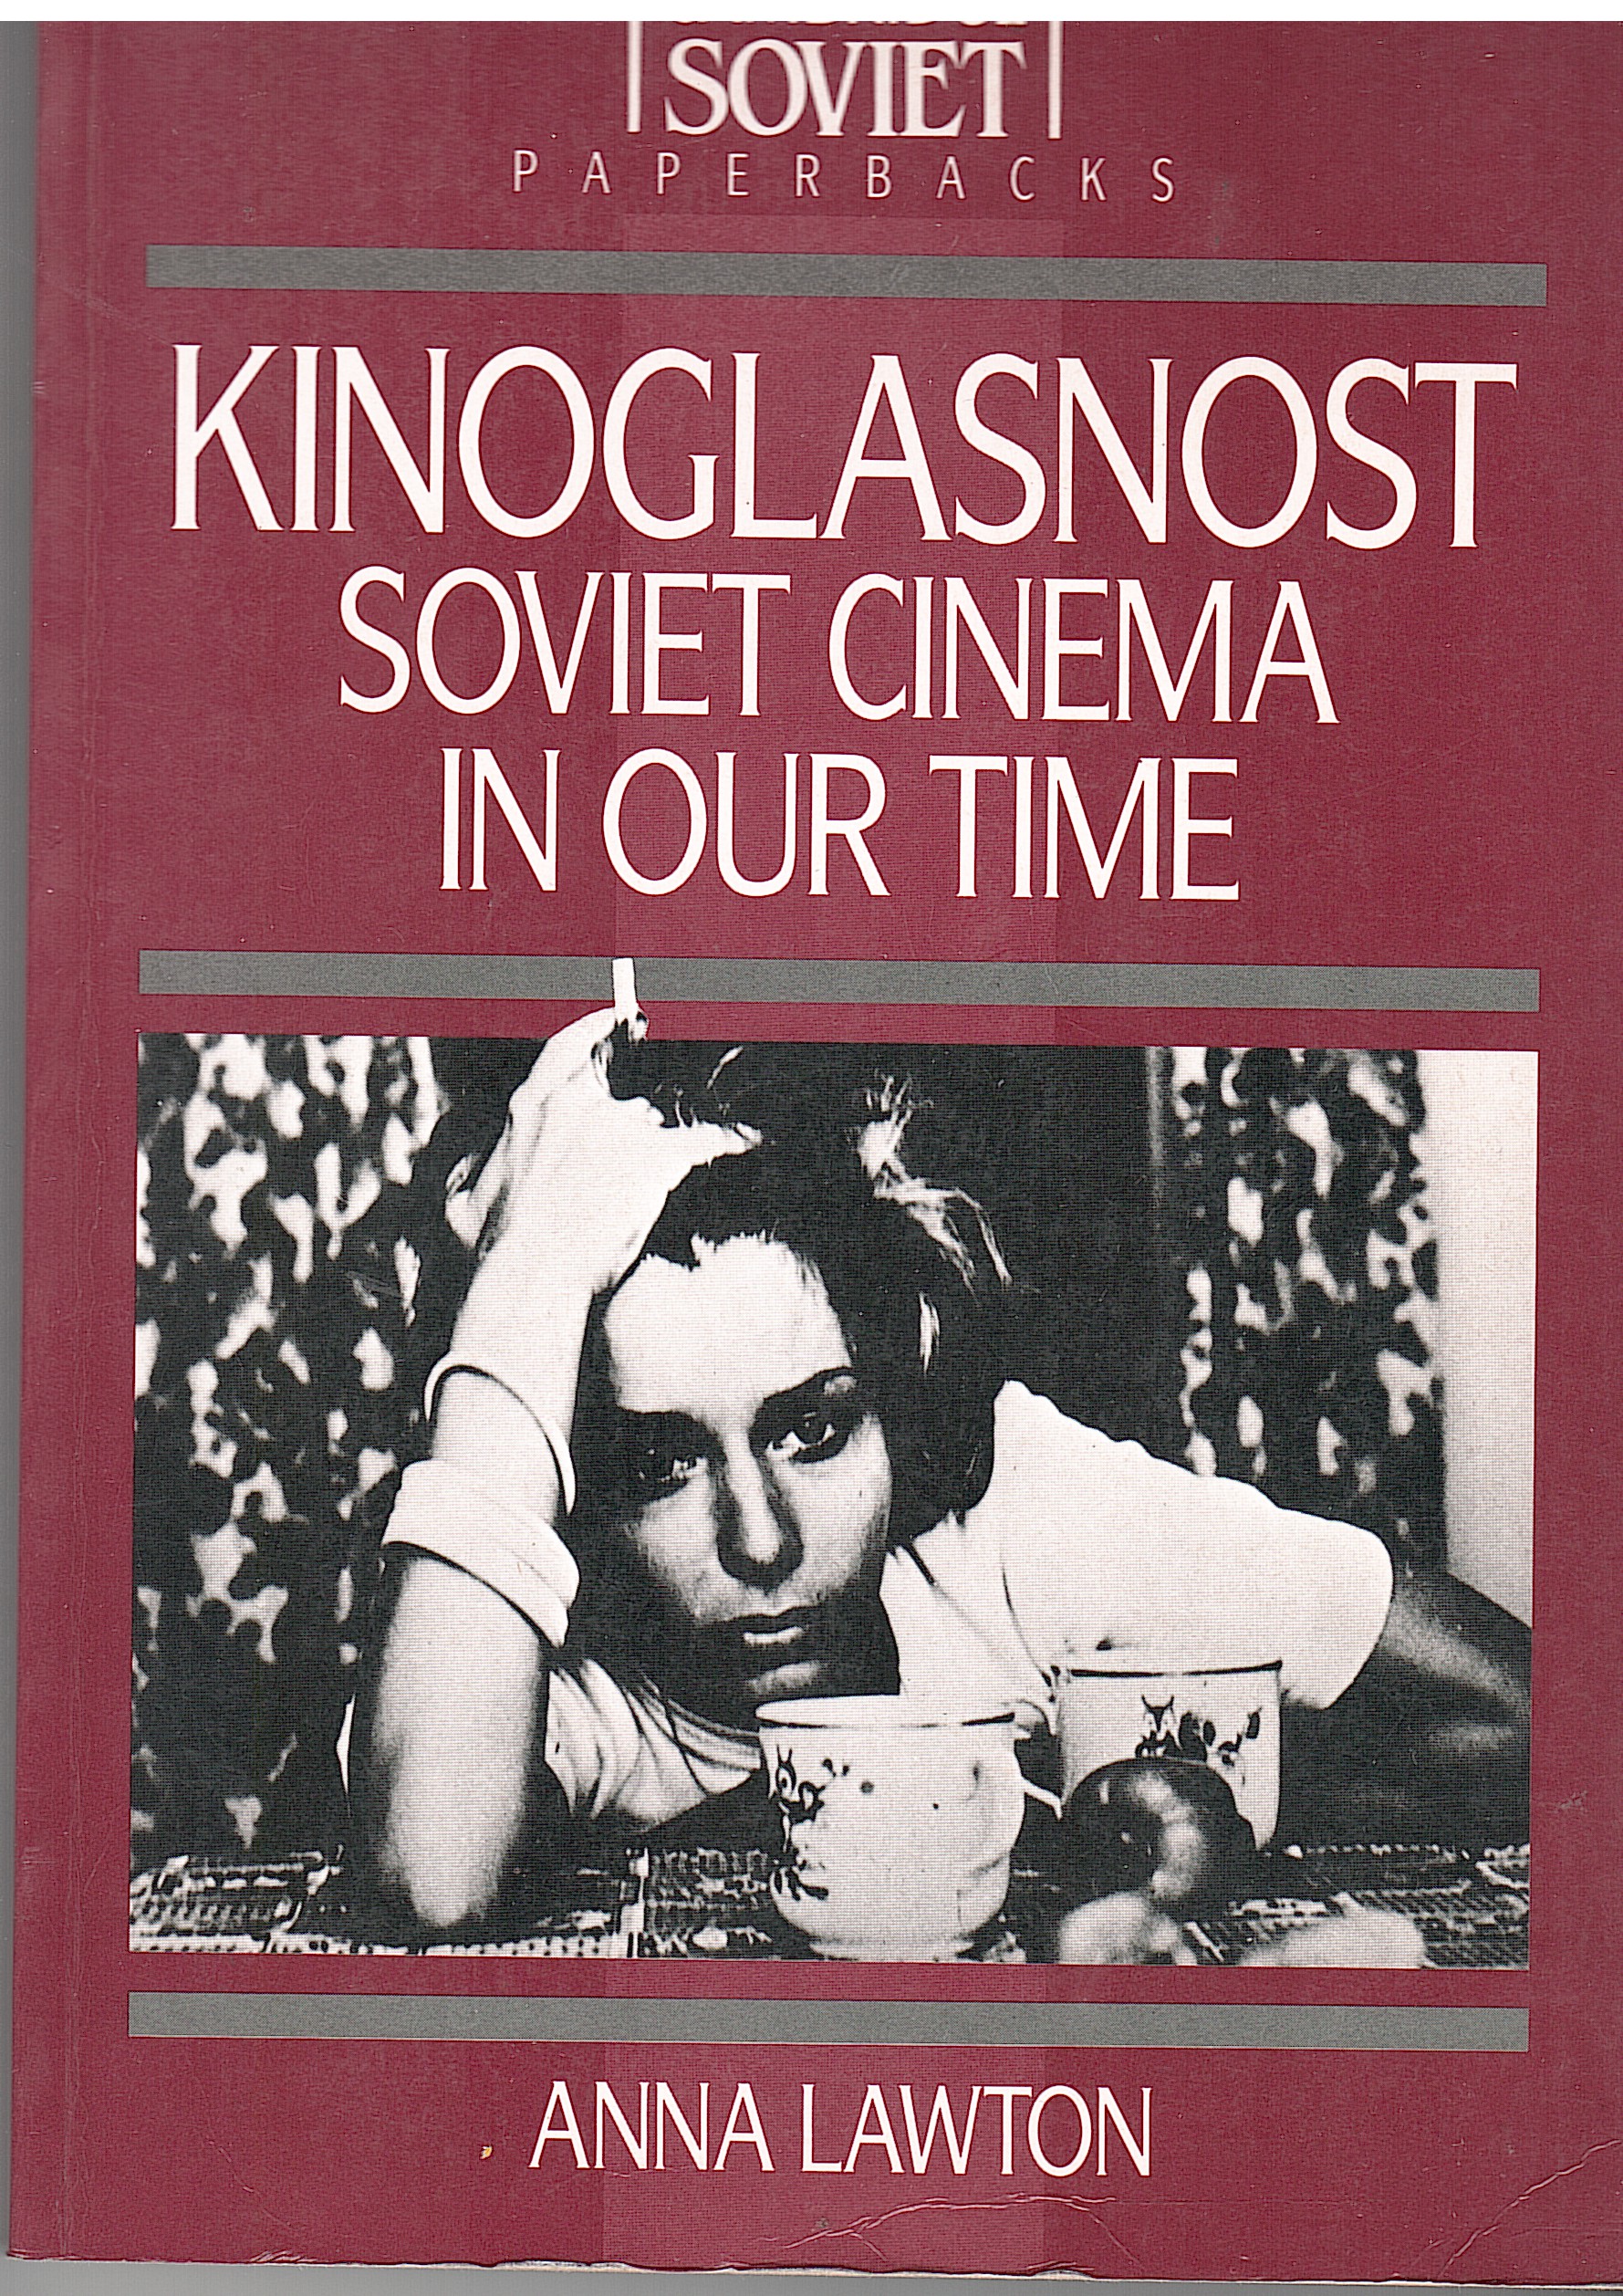 KINOGLASNOST SOVIET CINEMA IN OUR TIME